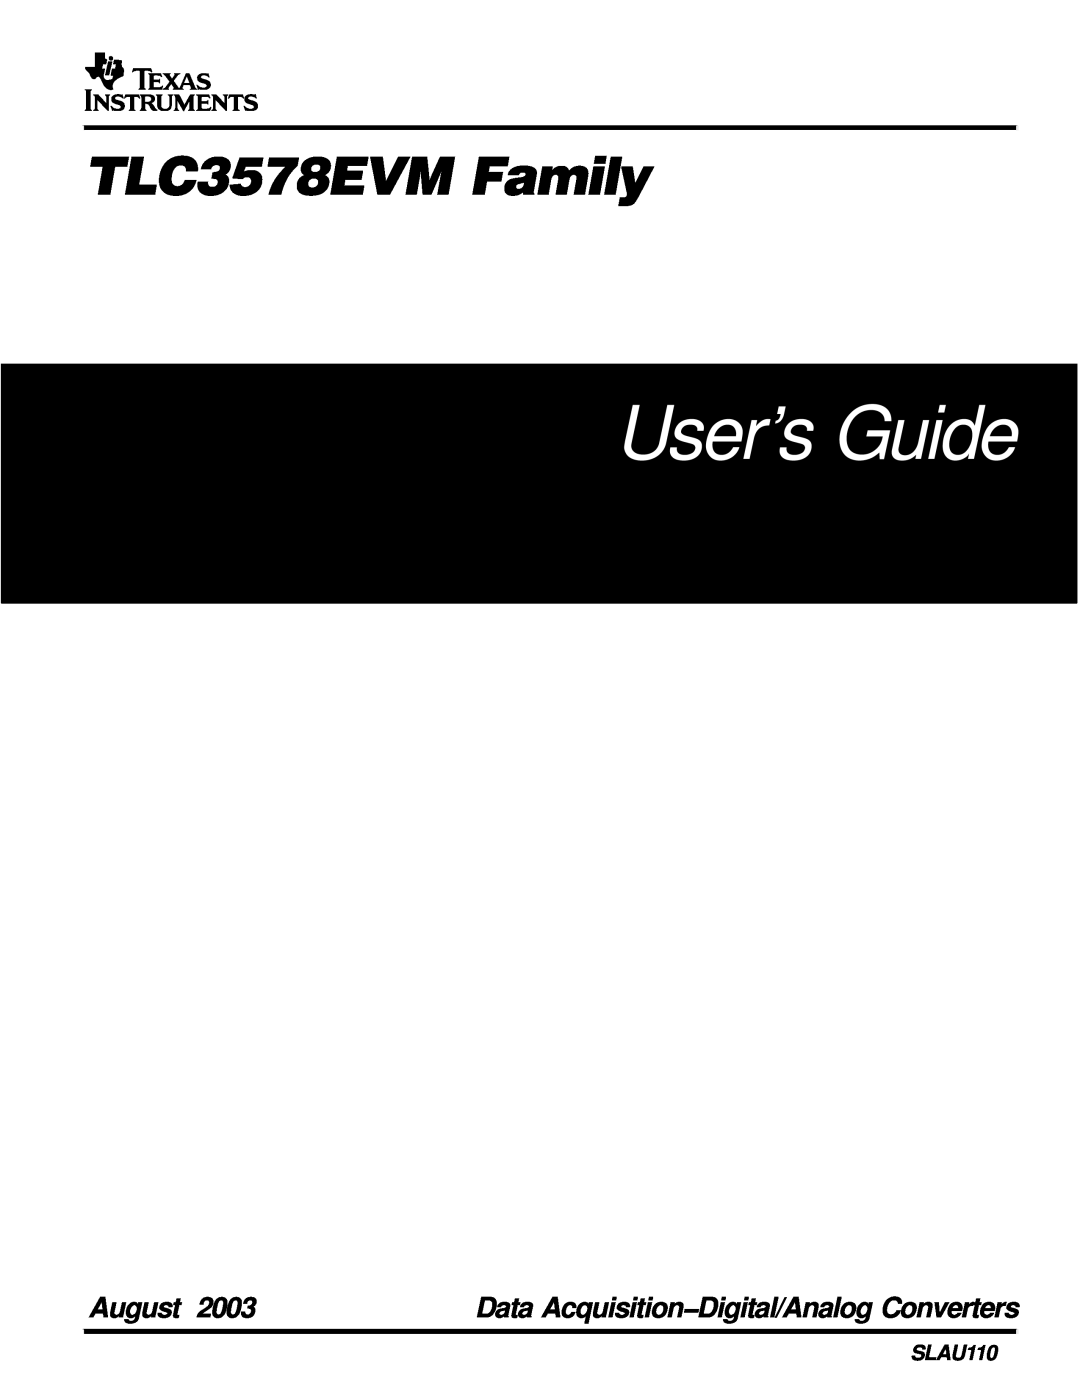 Texas Instruments manual User’s Guide, TLC3578EVM Family, August, Data Acquisition−Digital/Analog Converters, SLAU110 